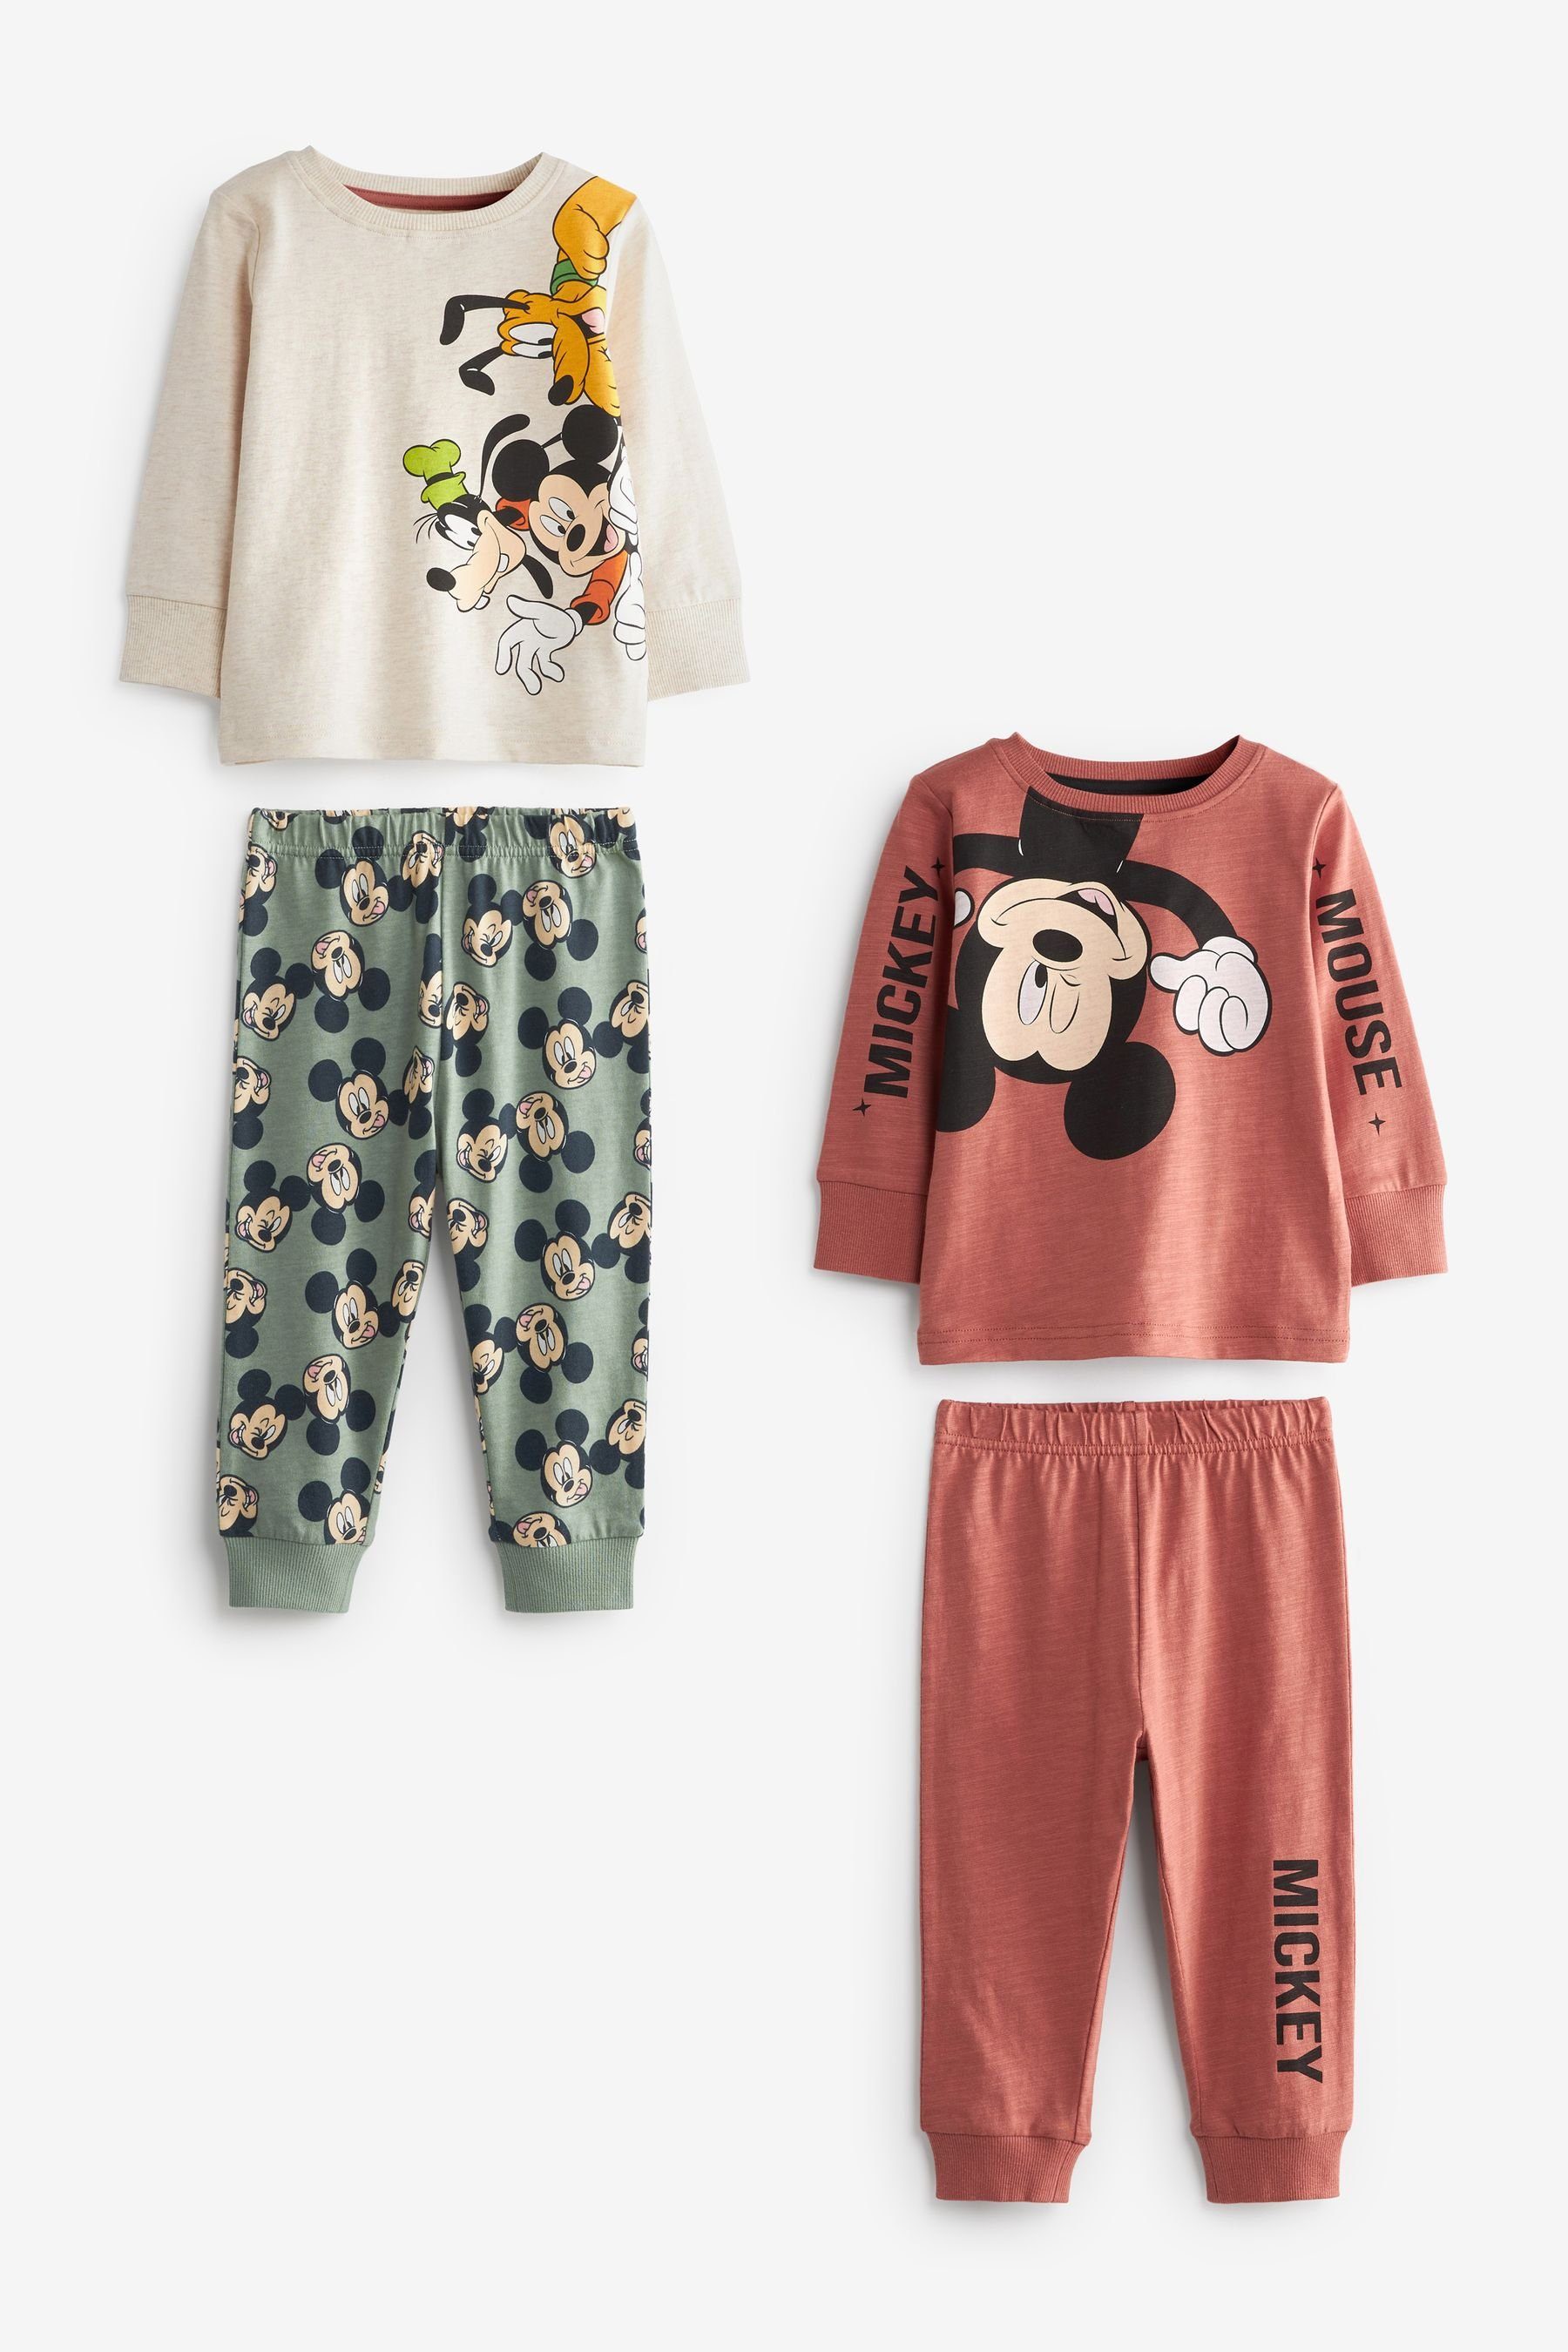 Next Pyjama Kuschelpyjama, 2er-Pack (4 tlg) Mickey Mouse Red/White